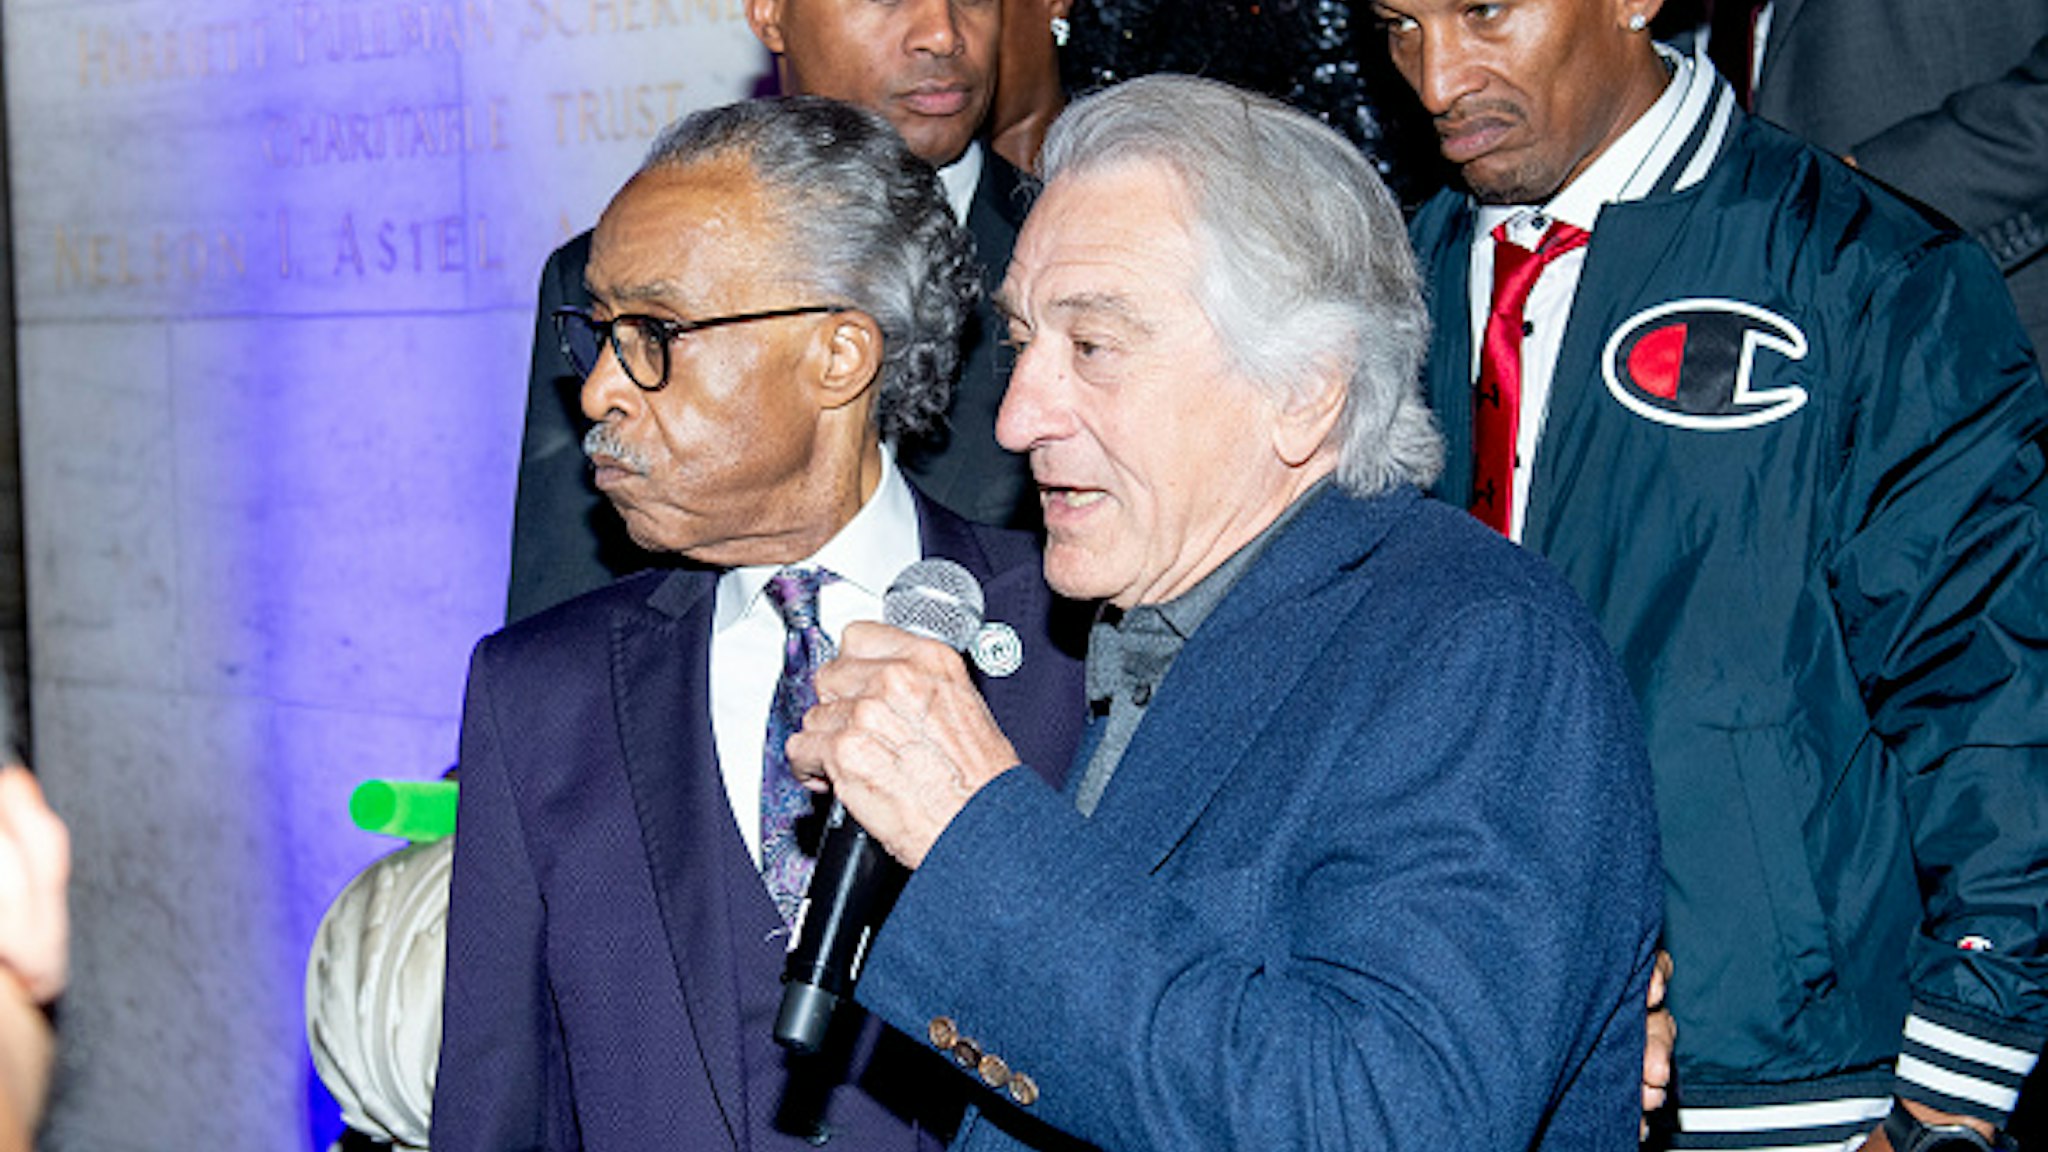 NEW YORK, NEW YORK - OCTOBER 03: Rev. Al Sharpton's with Robert De Niro on stage at Rev. Al Sharpton's 65th Birthday Celebration at New York Public Library - Stephen A Schwartzman Building on October 03, 2019 in New York City.